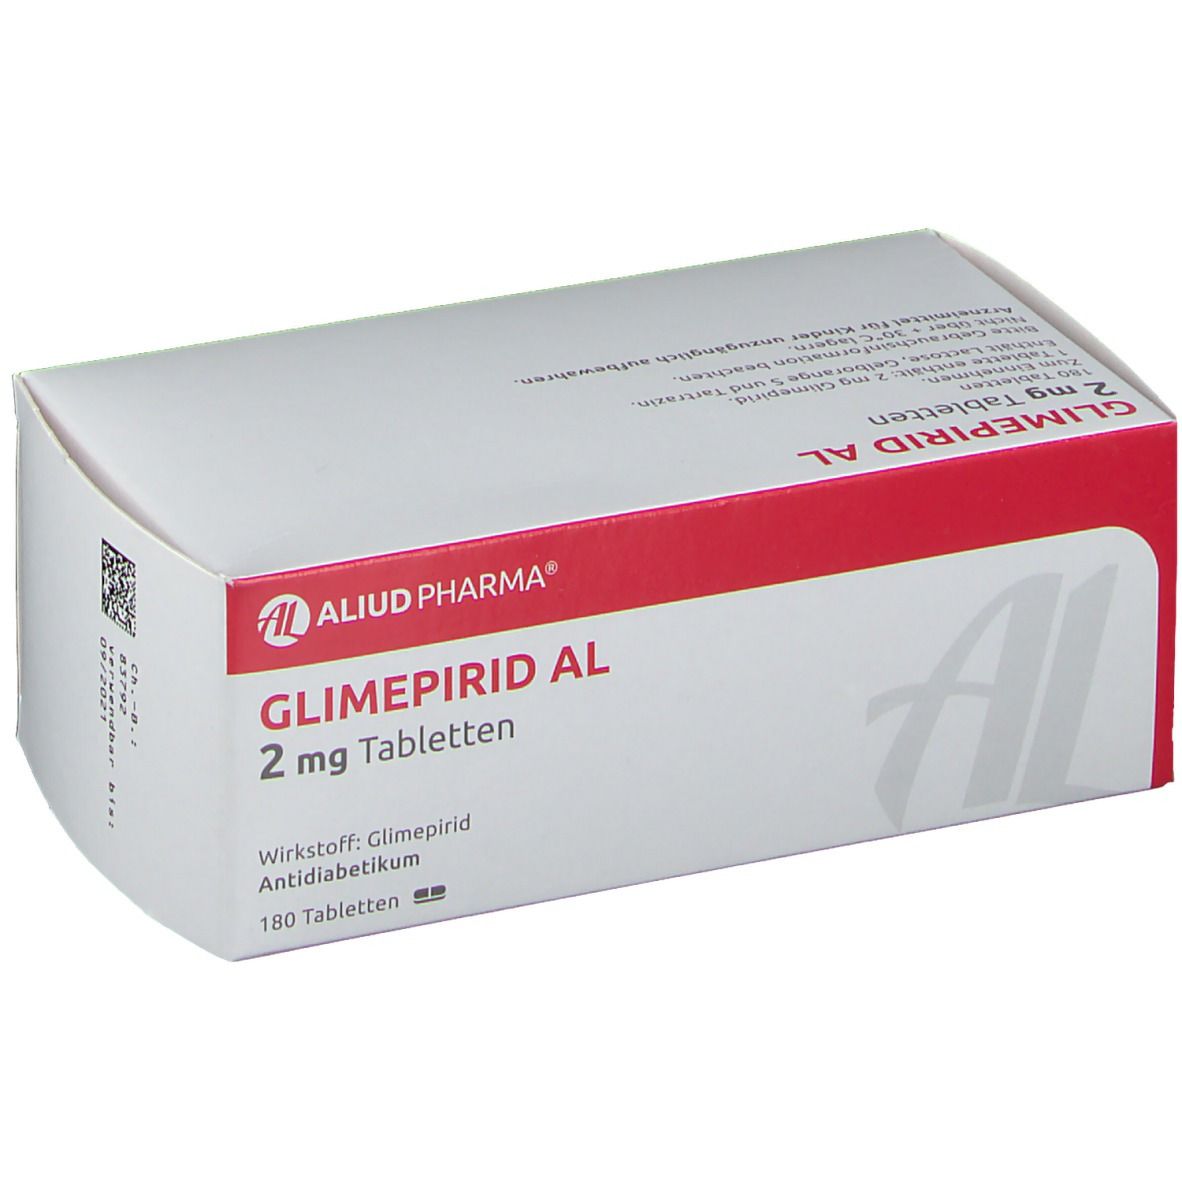 Glimepirid AL 2 mg